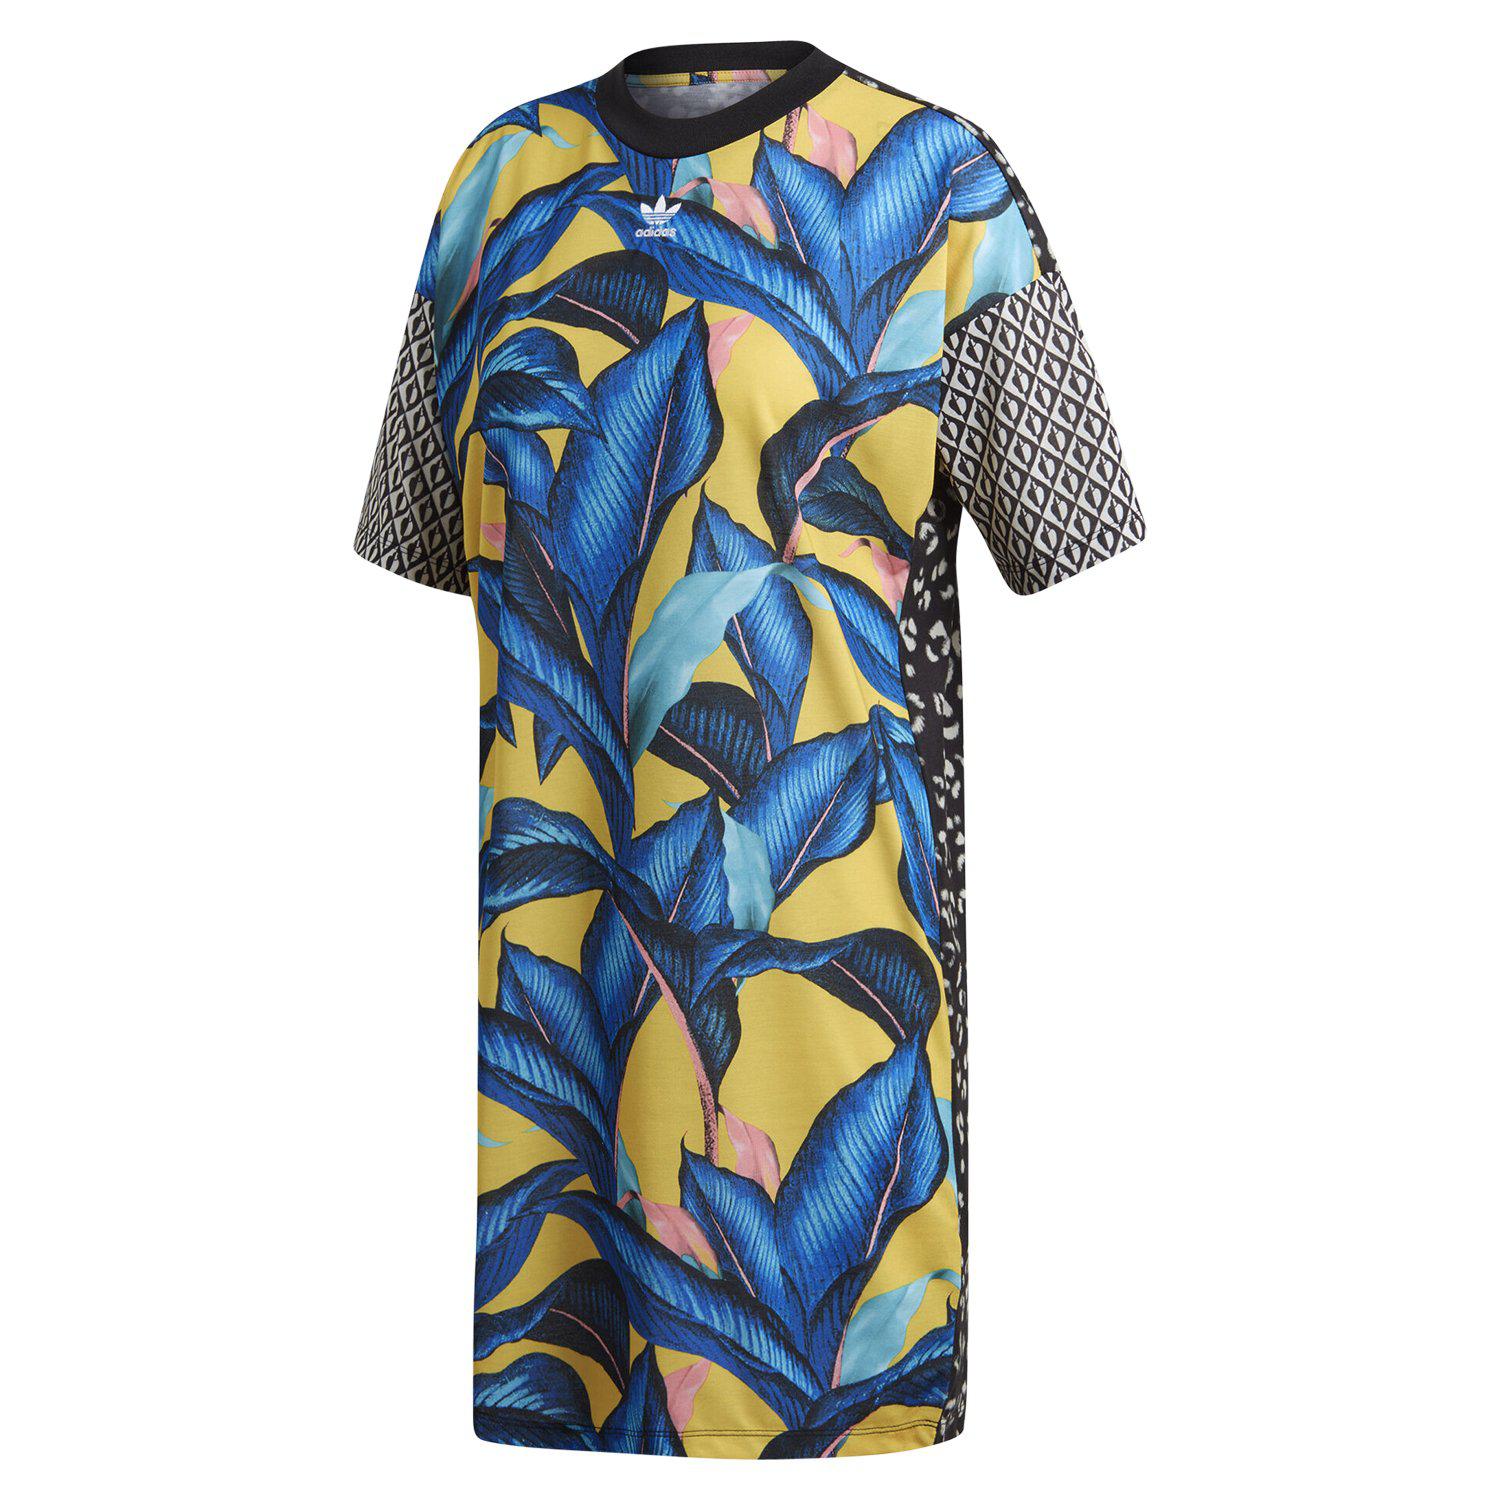 Coronel medida Sumergir adidas Originals x Farm Mujer Graphic Tee Dress - Multicolor DH3057 - Trade  Sports